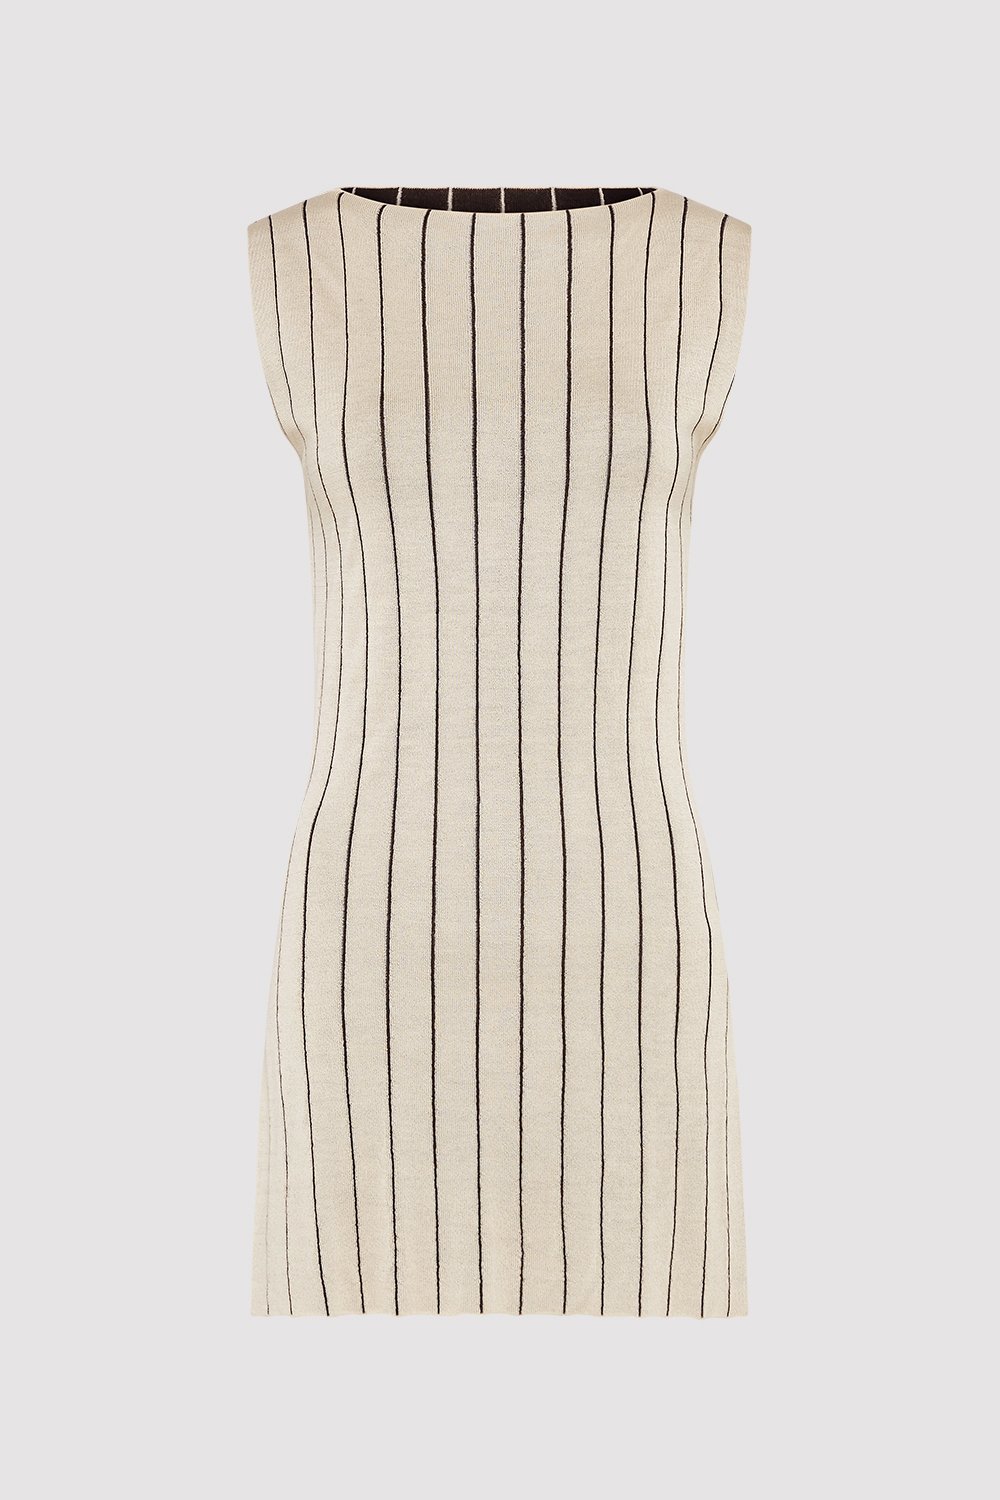 Jacquard Stripe Knit Tunic- Ecru